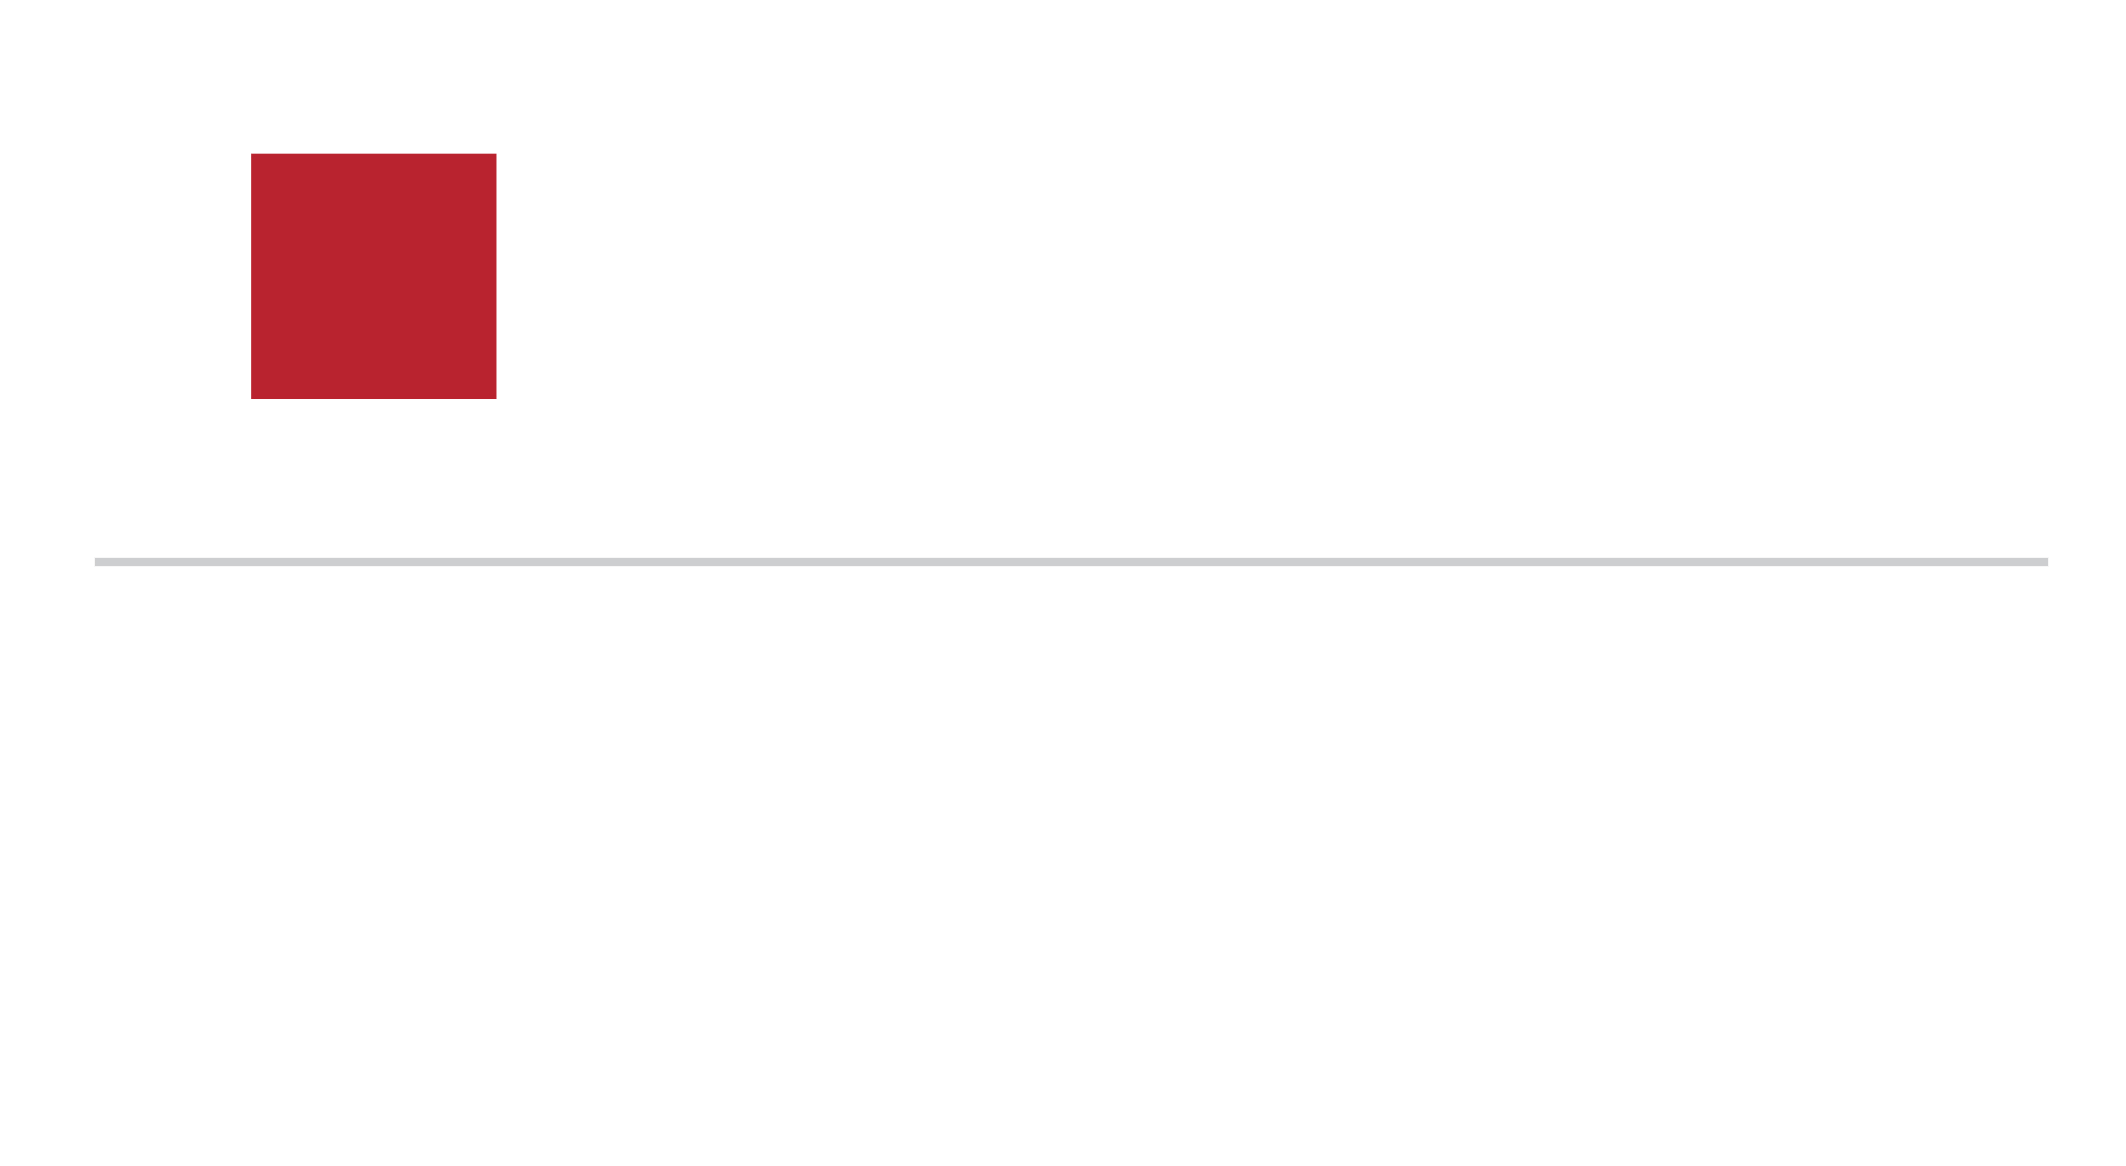 ping identity forgerock v3